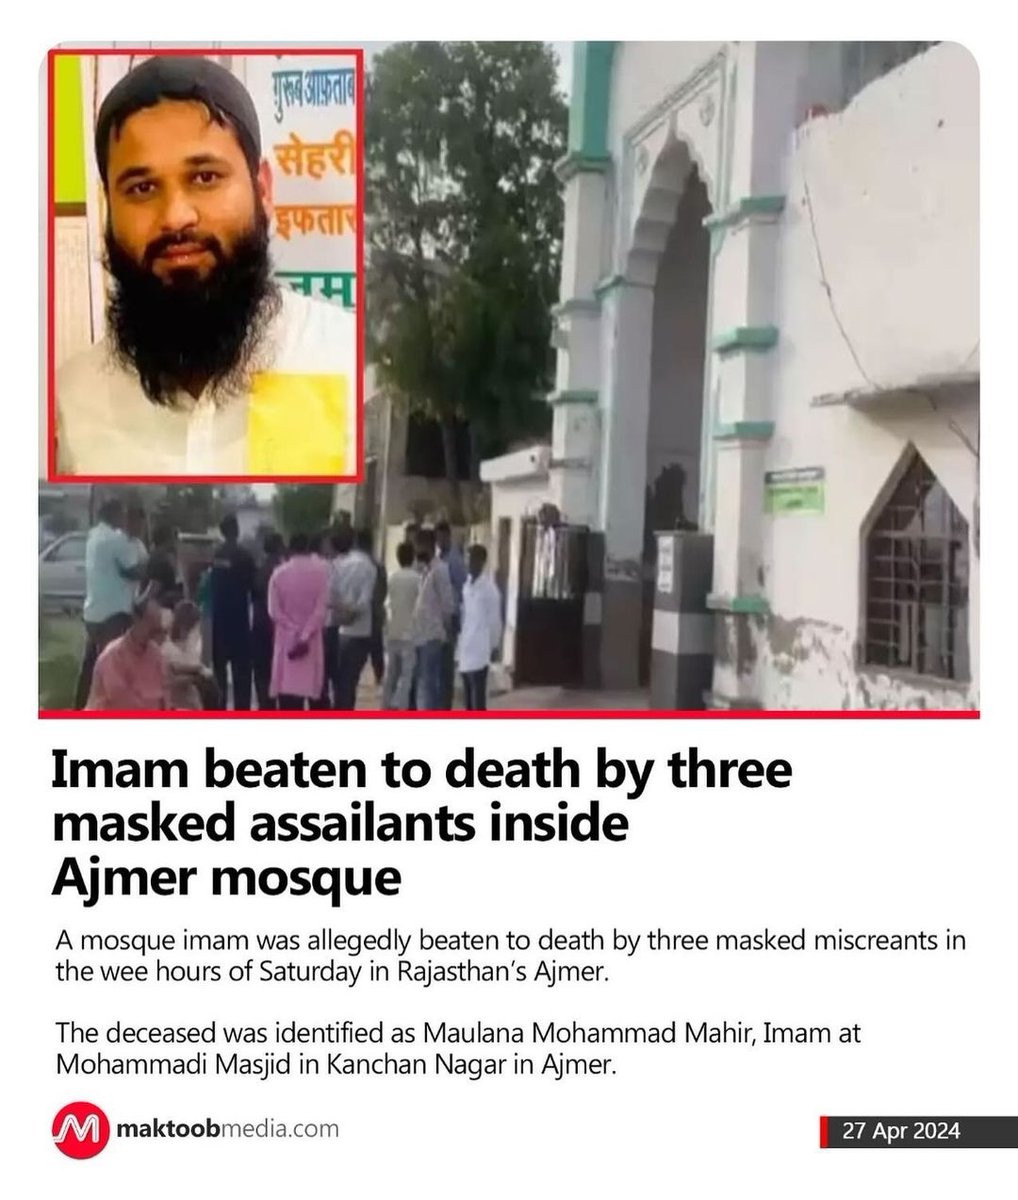 Maulana Mahir, imam at Mohammadi masjid in Ajmer City of Rajasthan beaten to death inside mosque